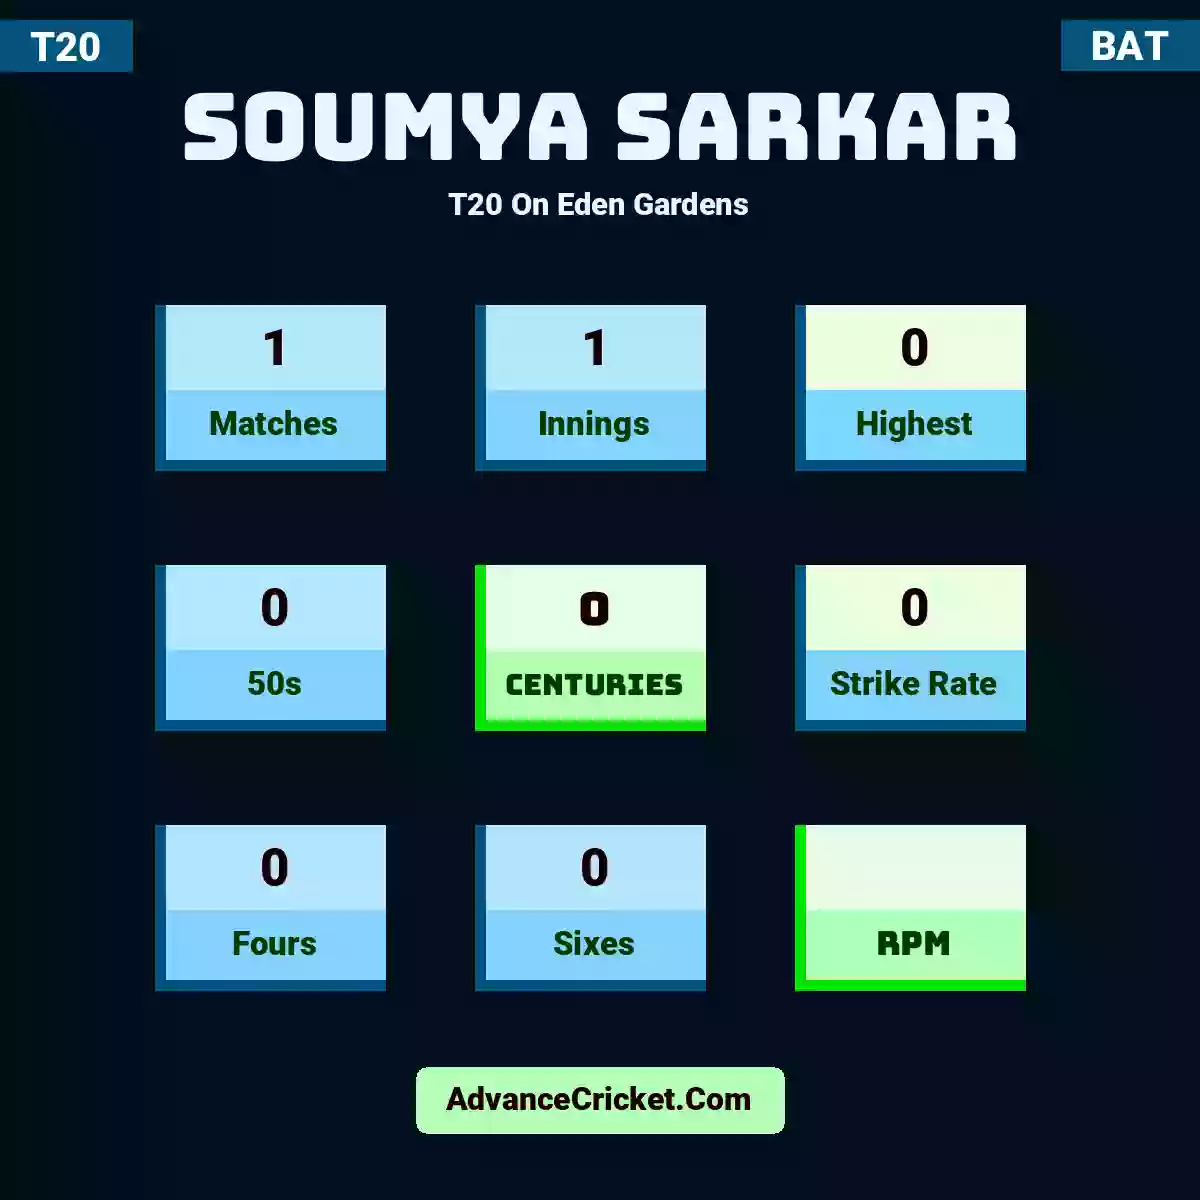 Soumya Sarkar T20  On Eden Gardens, Soumya Sarkar played 1 matches, scored 0 runs as highest, 0 half-centuries, and 0 centuries, with a strike rate of 0. S.Sarkar hit 0 fours and 0 sixes.